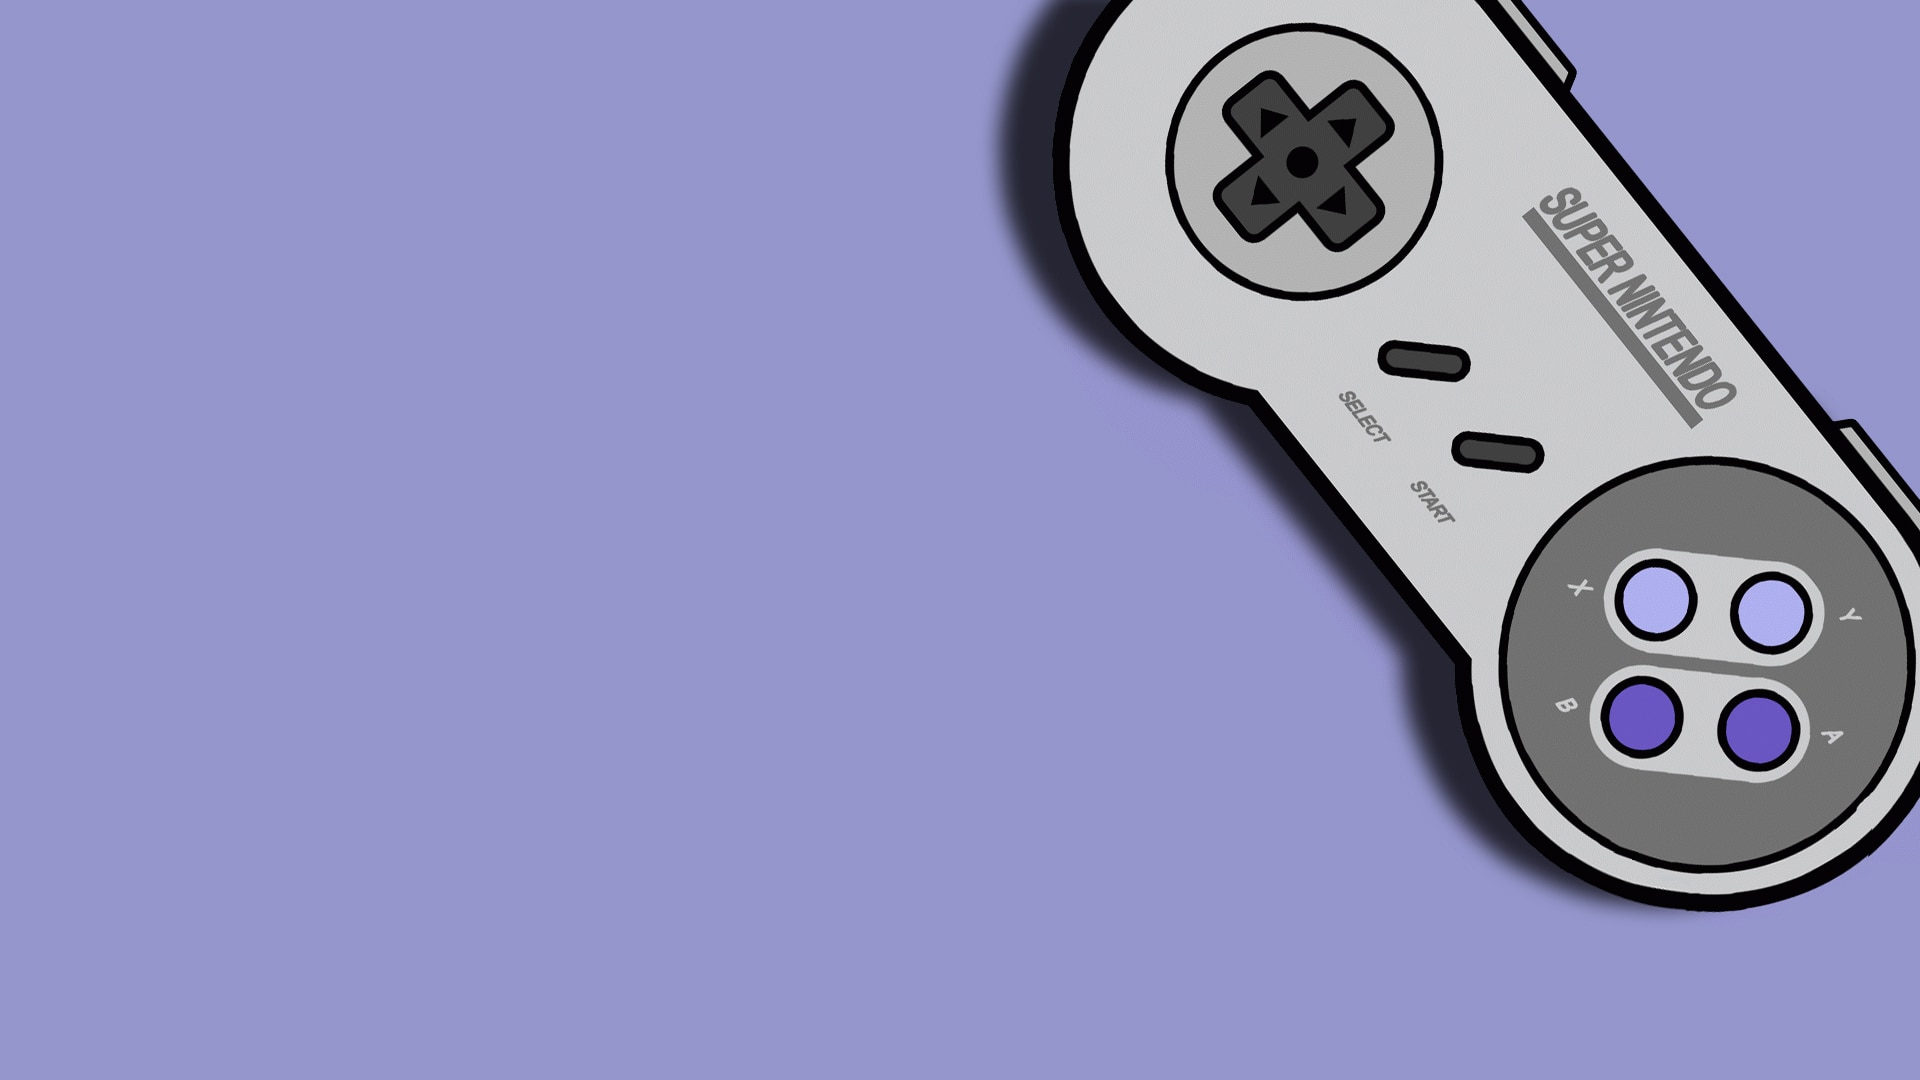 Nintendo Switch - Super Mario Odyssey - Multi Moon - The Models Resource